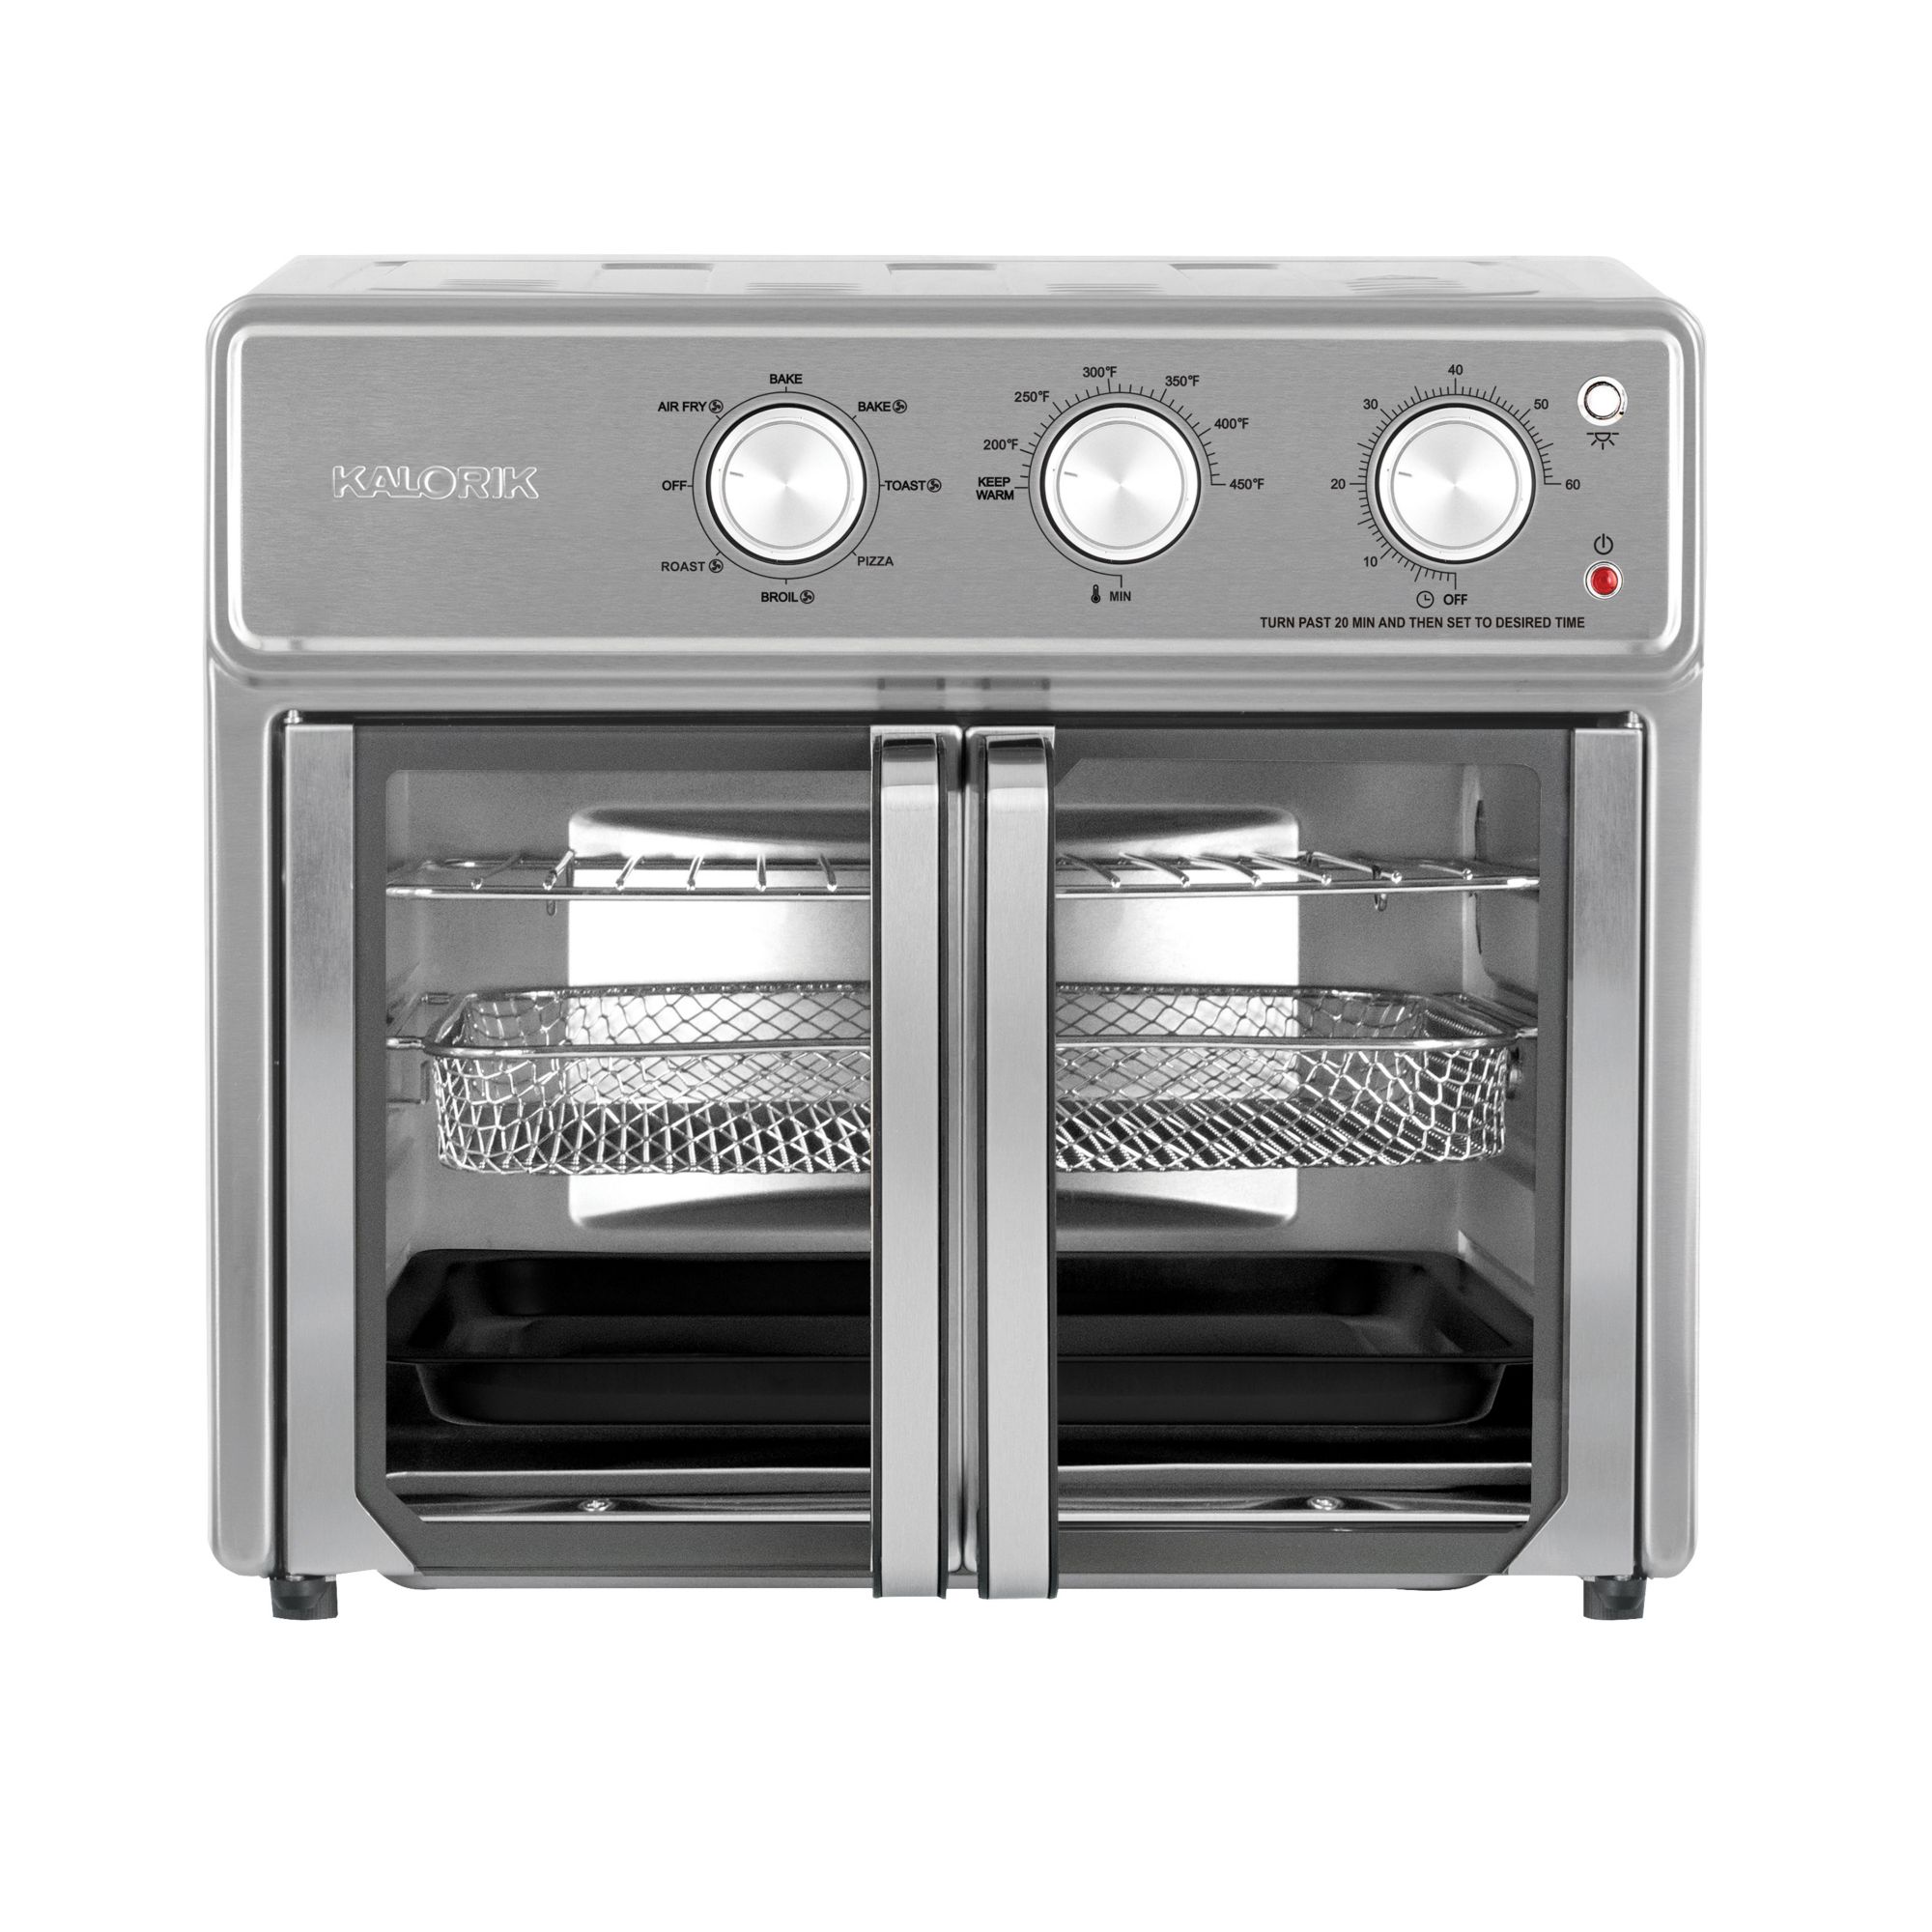 Kalorik Digital Maxx Stainless Steel Air Fryer Oven, 1 ct - Fred Meyer